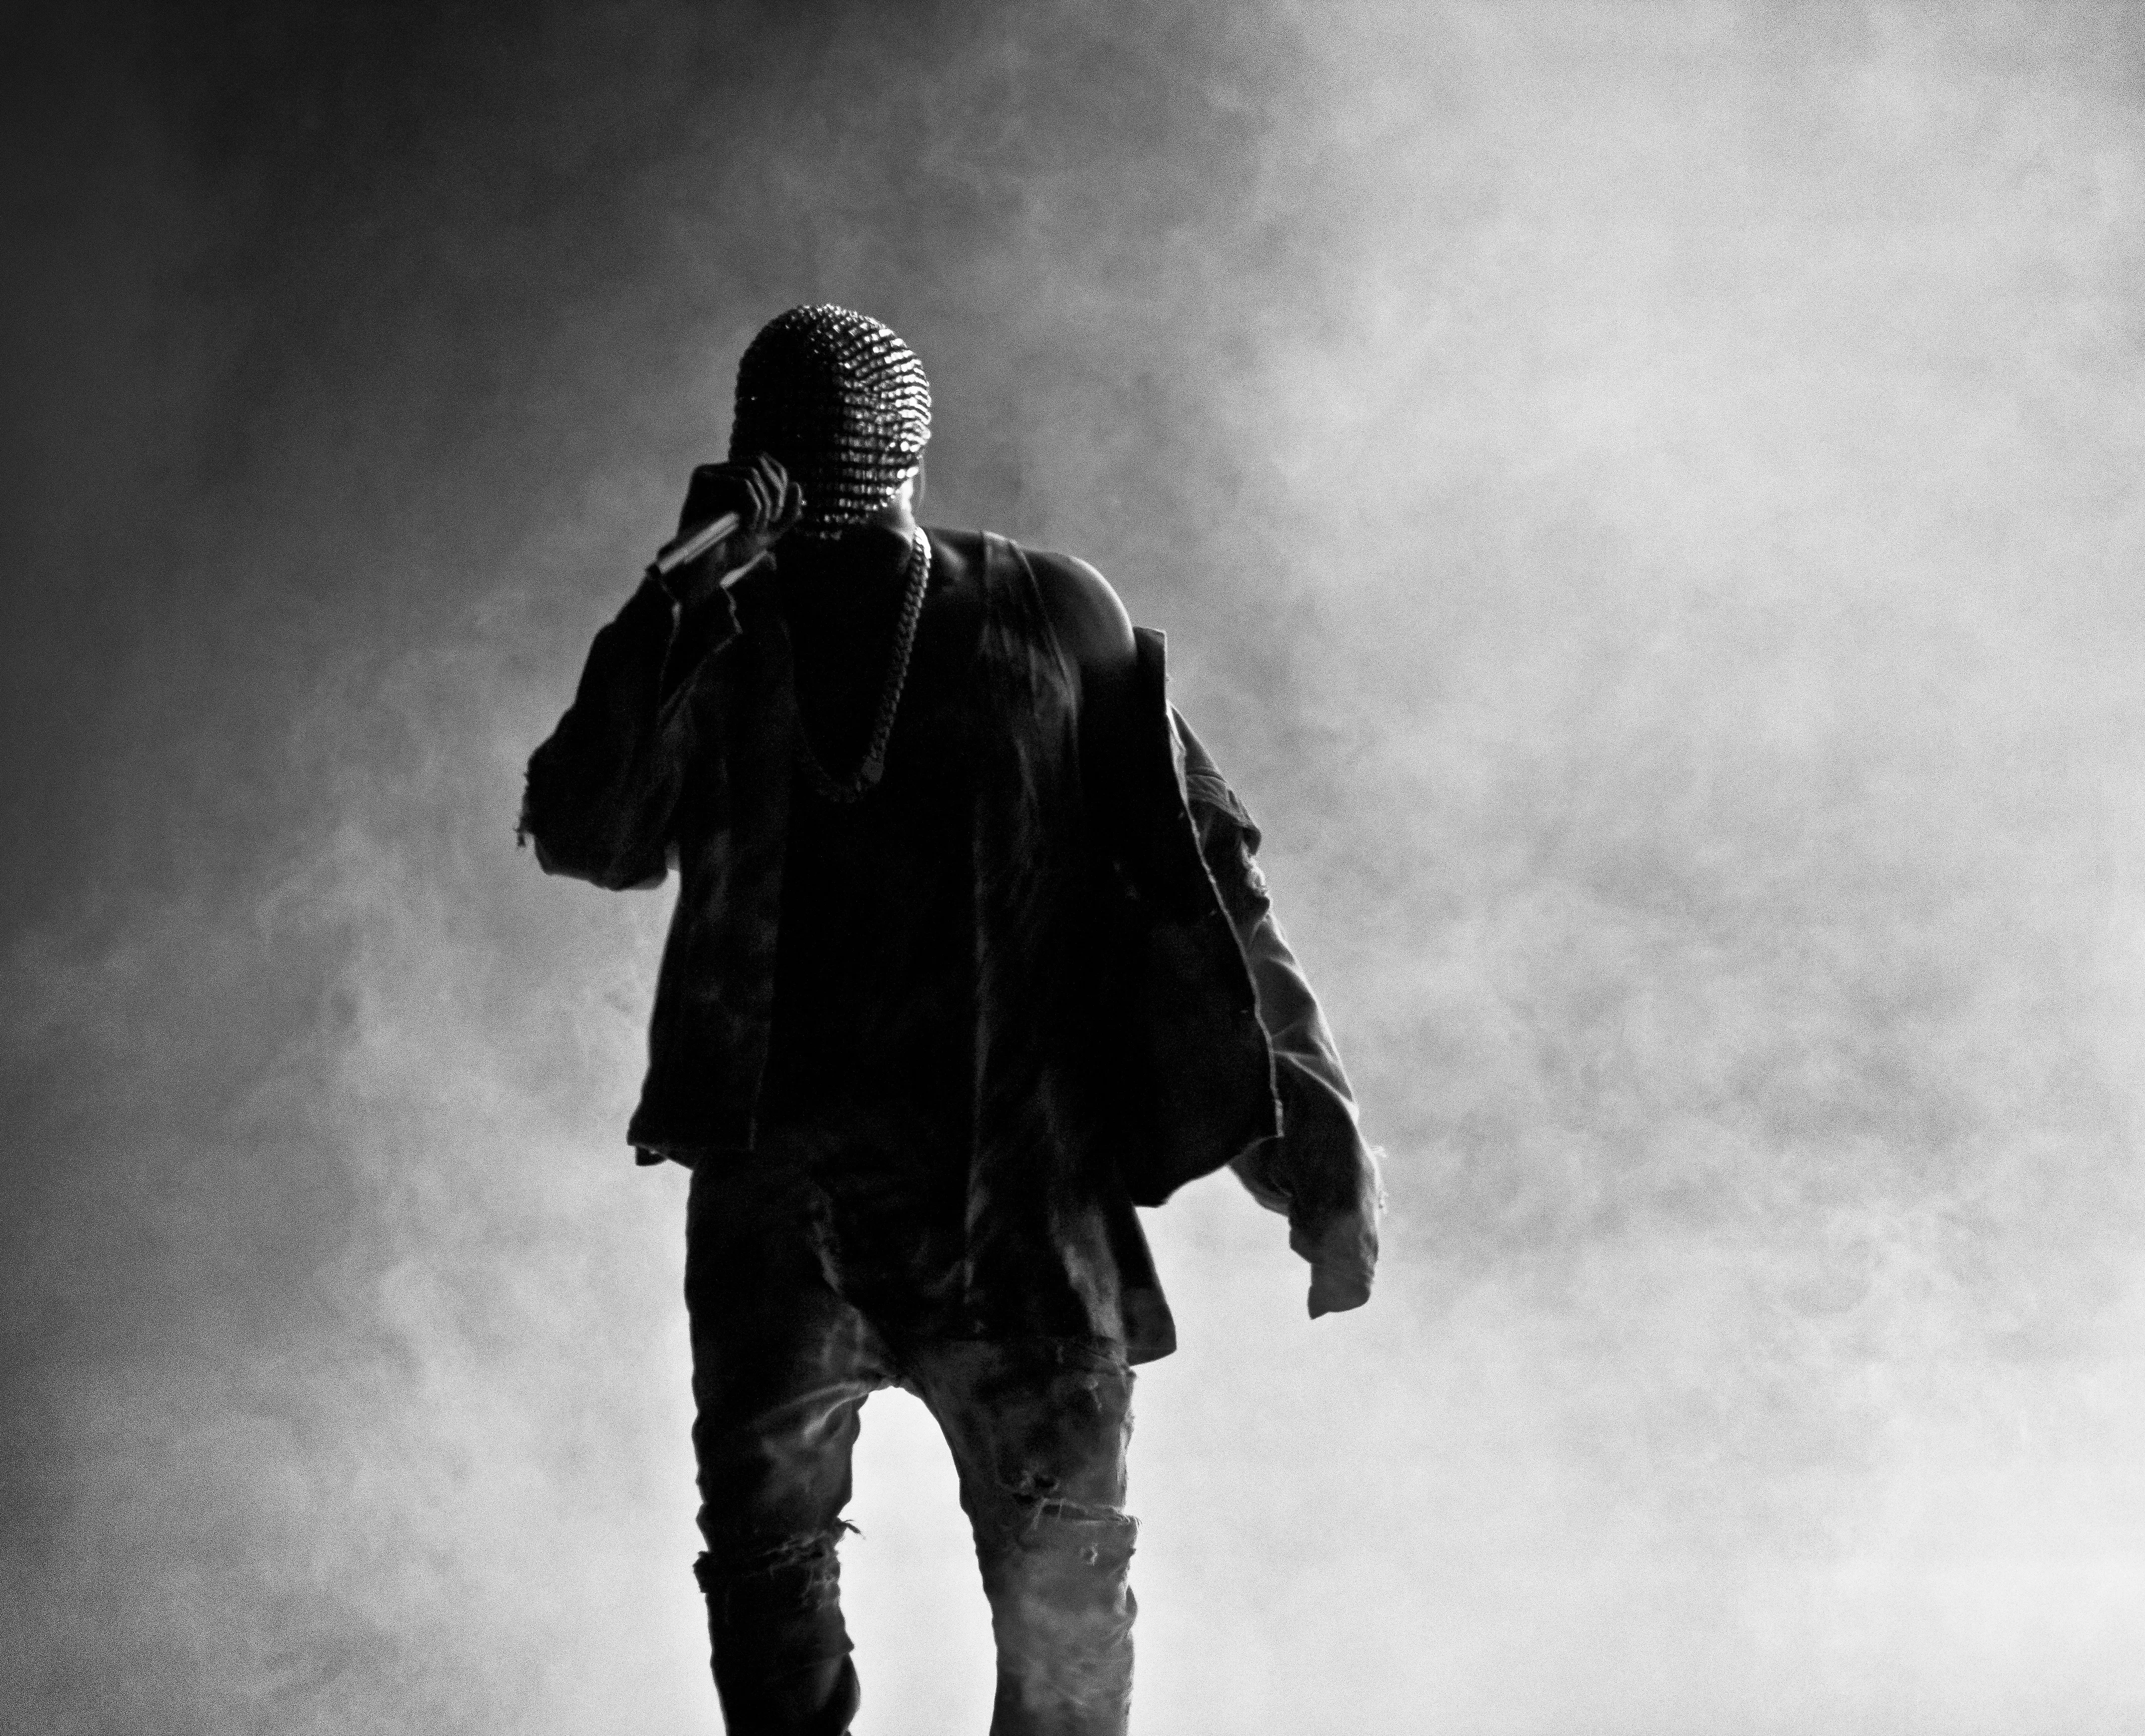 Reseña sobre el álbum de Kanye west 